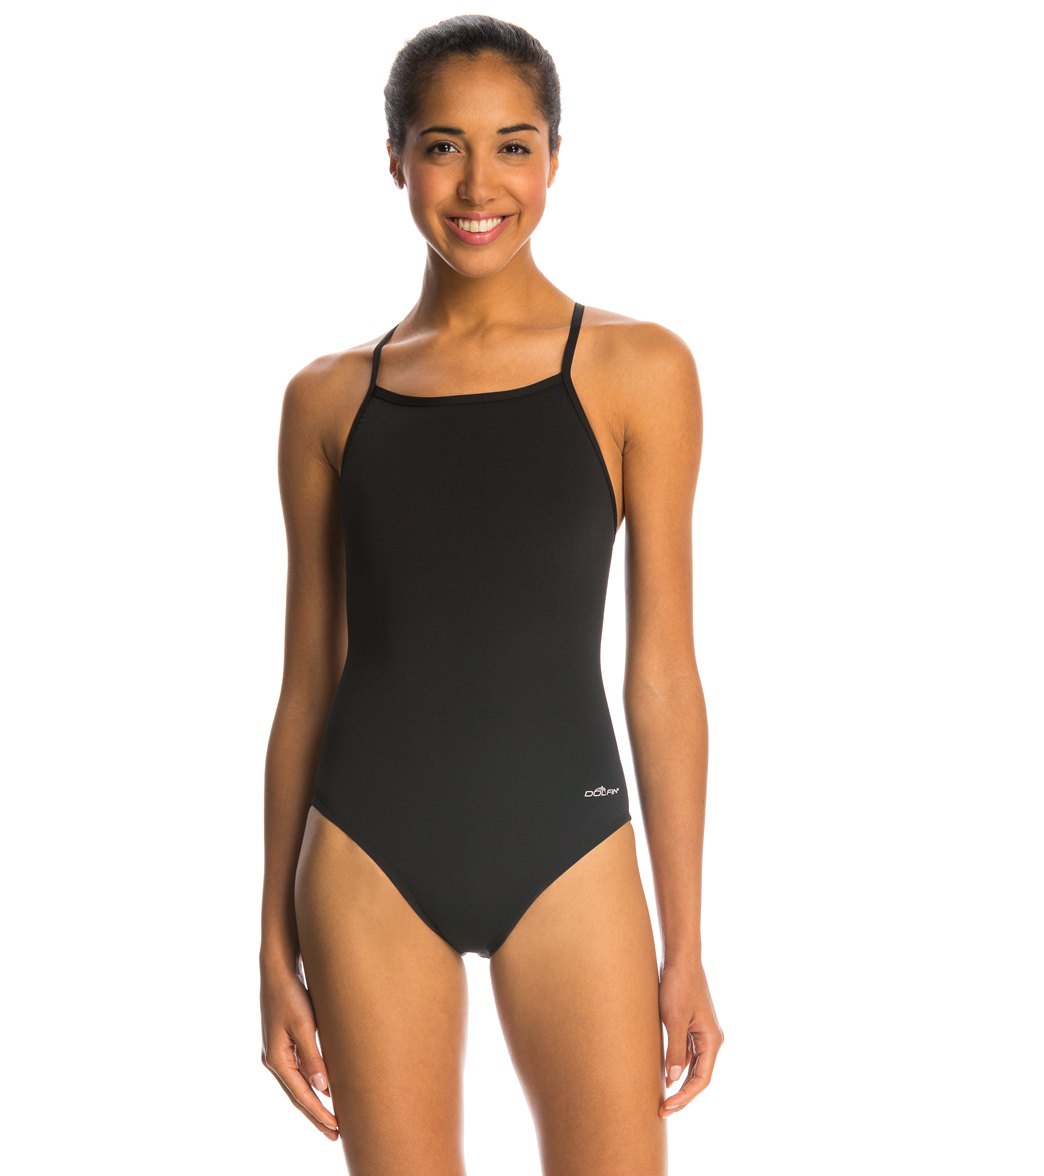 Dolfin Reliance Solid V-Back One Piece Swimsuit - Black 28 - Swimoutlet.com